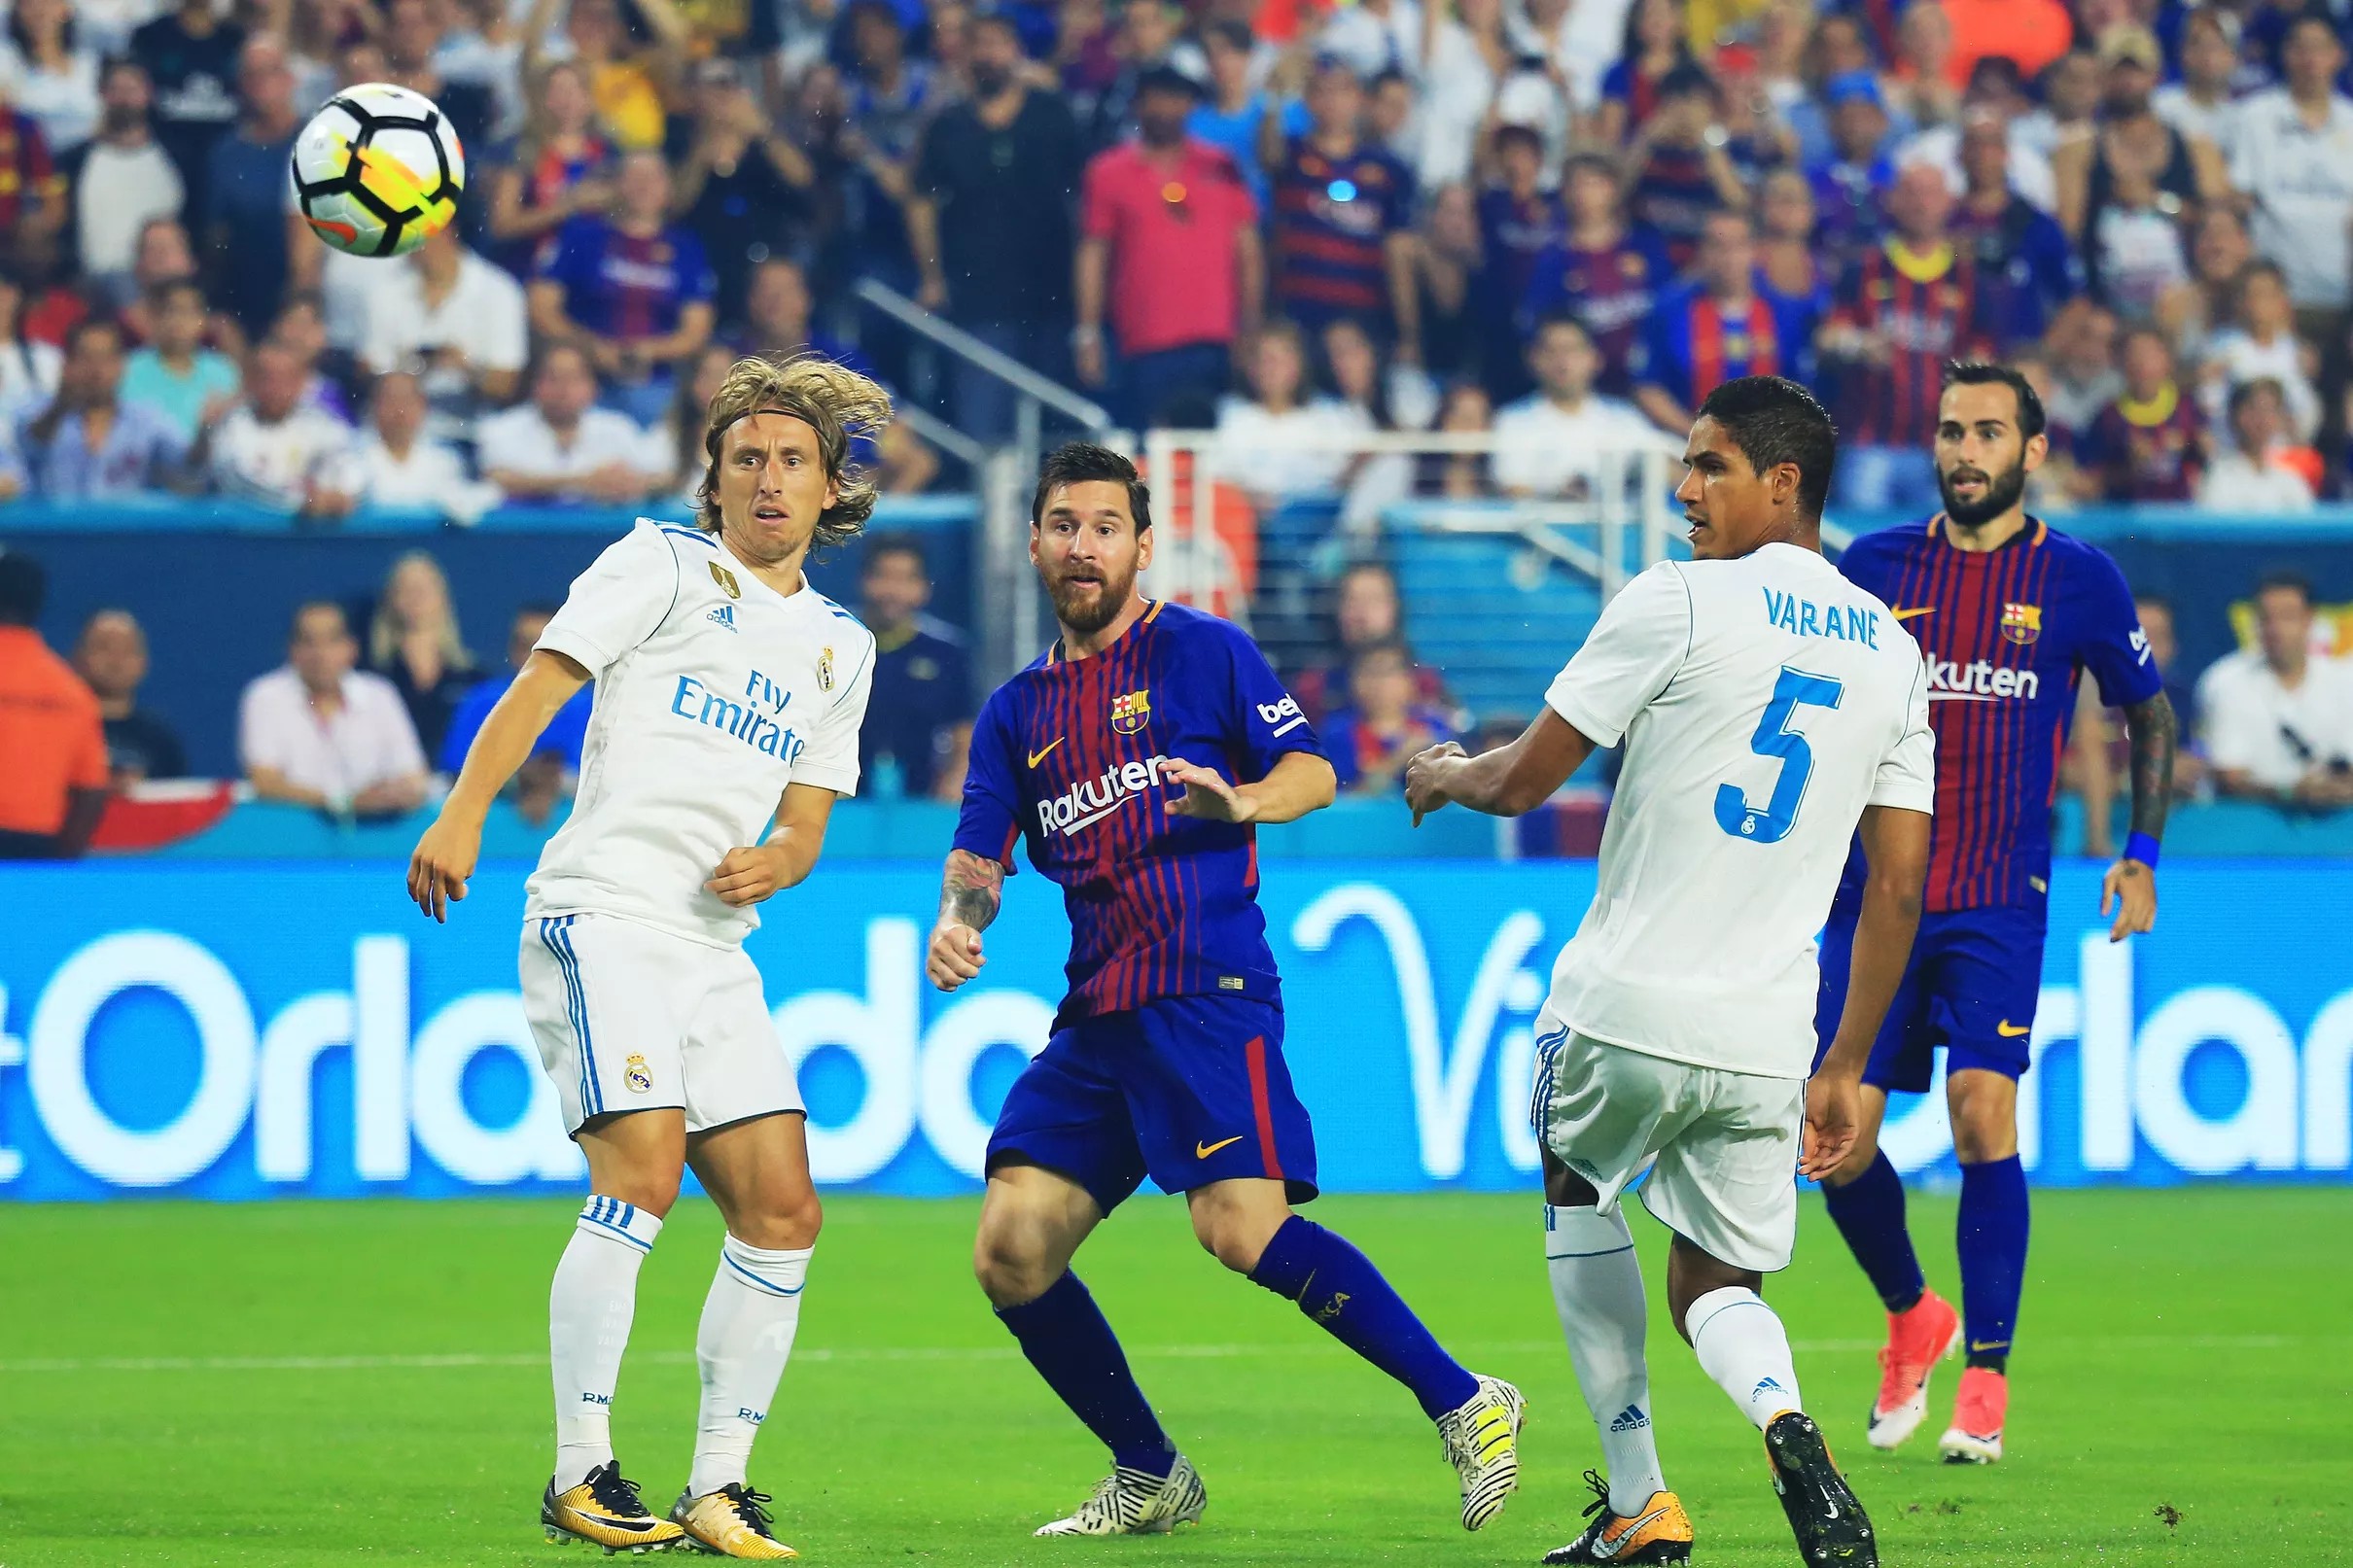 Barcelona vs. Real Madrid, 2017 International Champions Cup Final